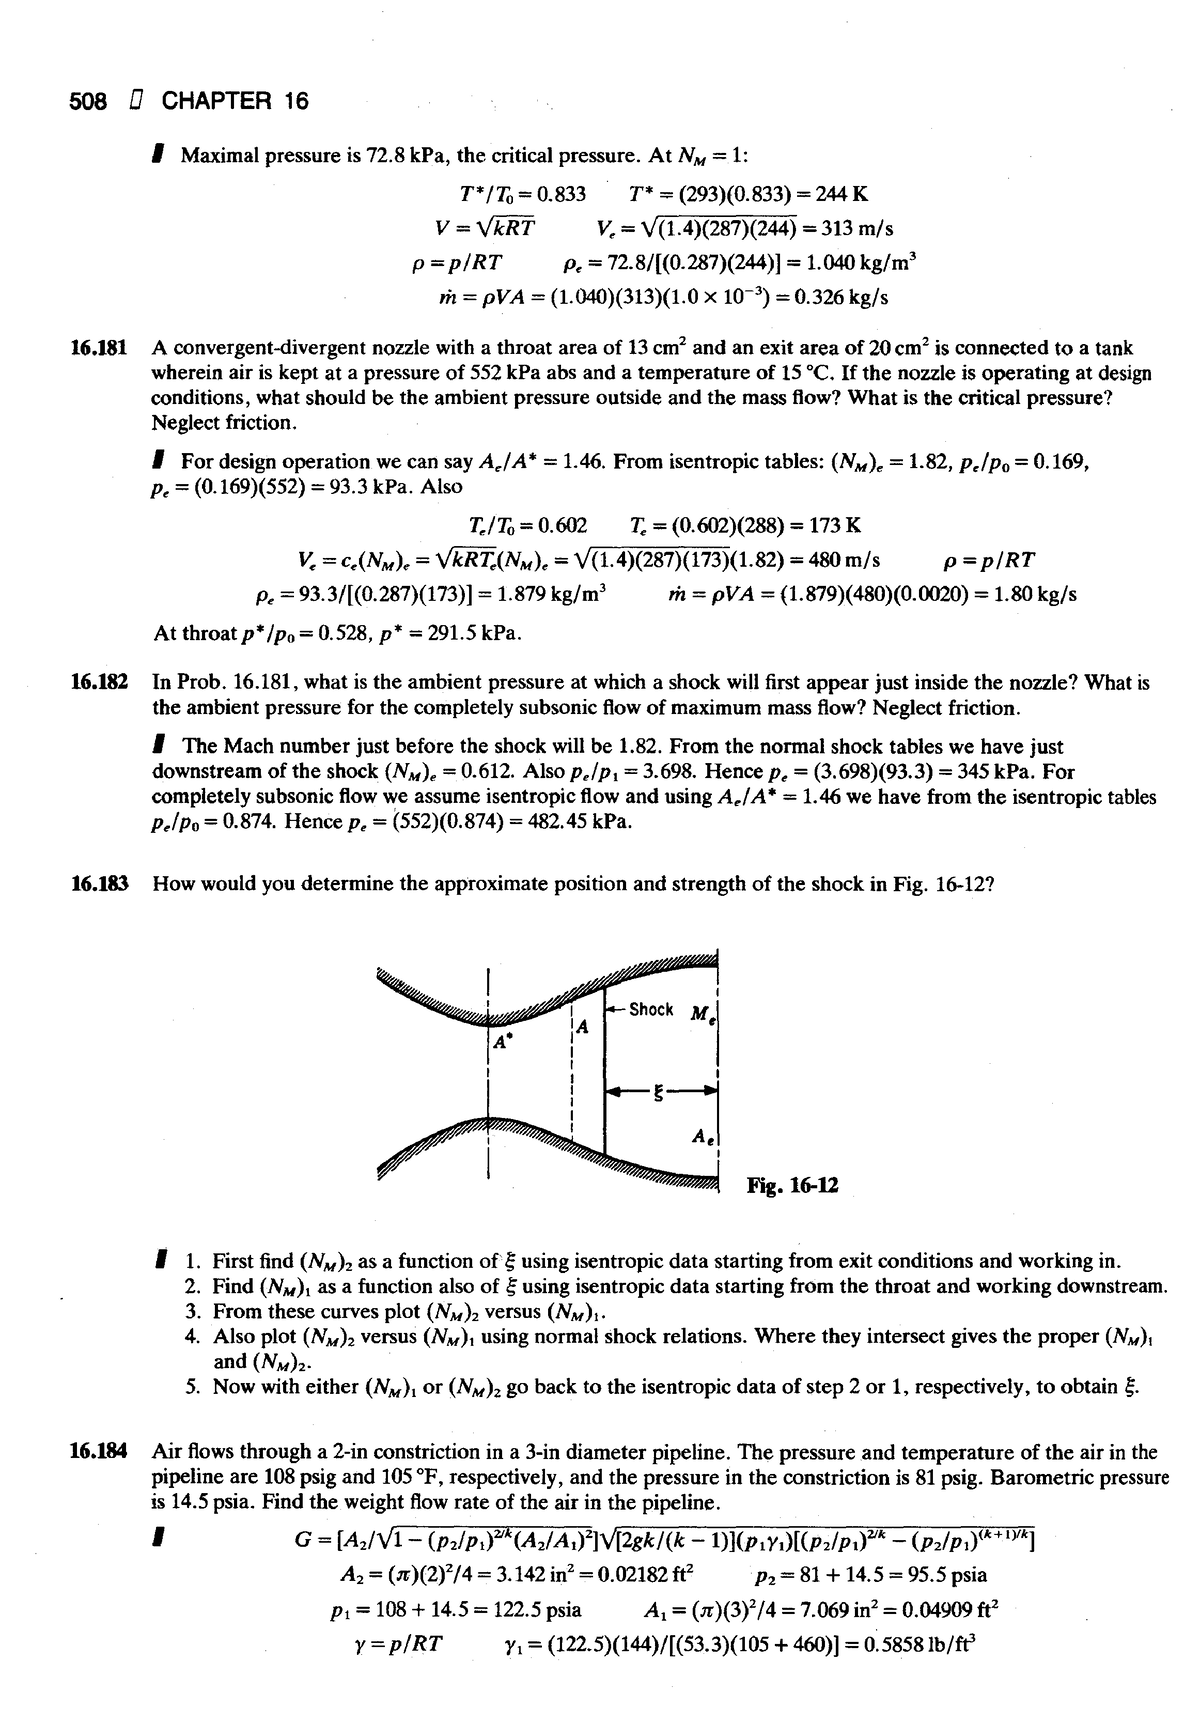 schaum's 2500 solved problems in fluid mechanics pdf